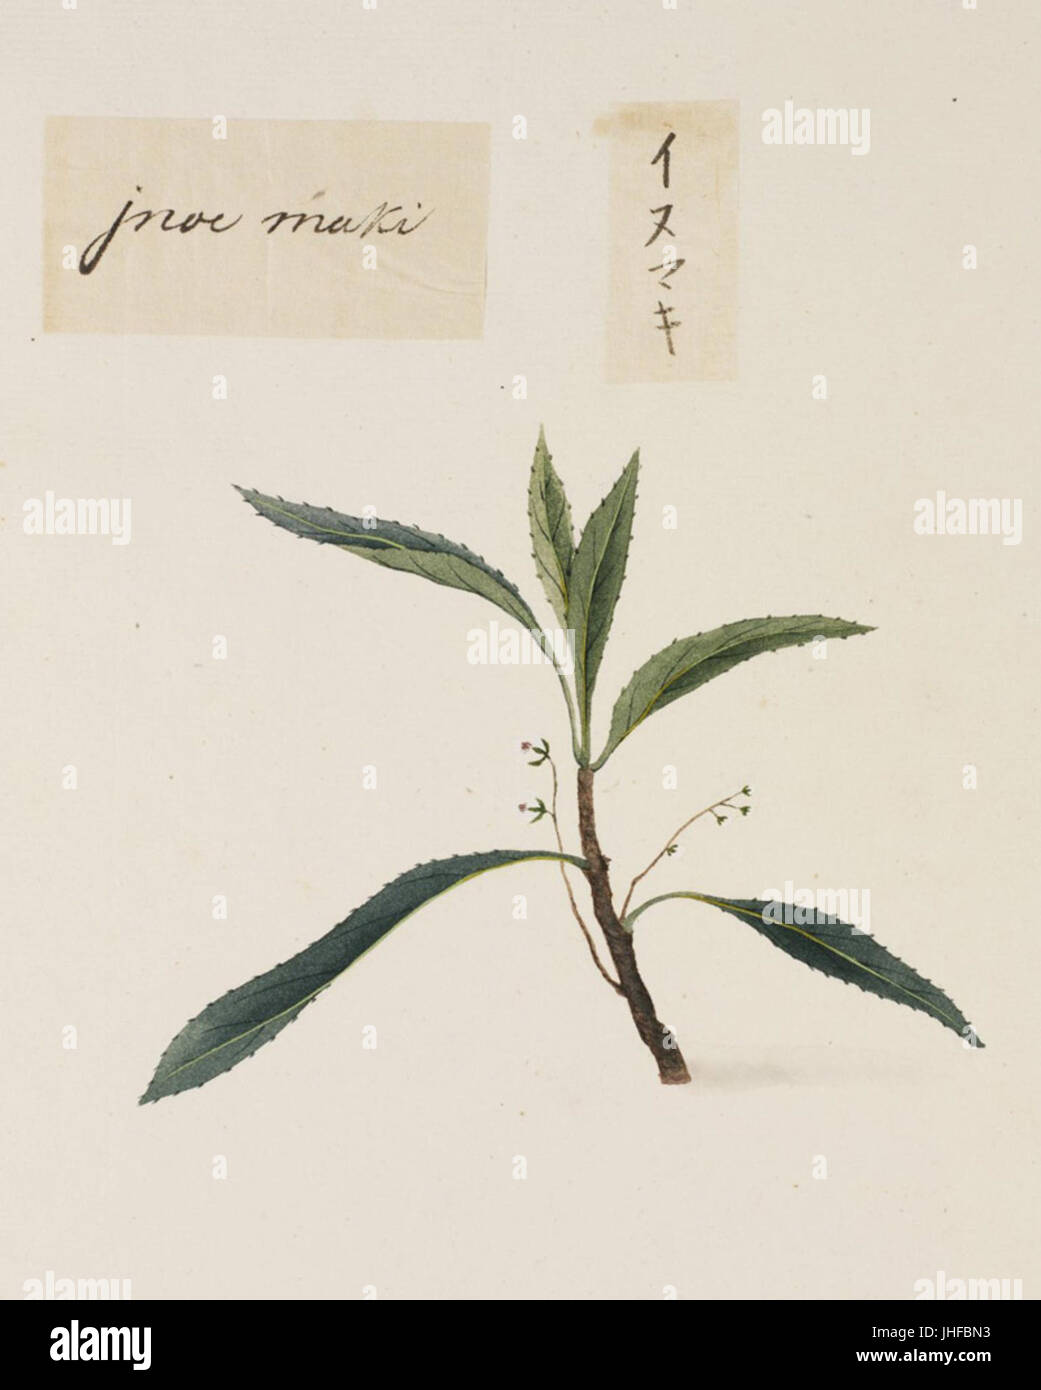 Naturalis Biodiversity Center - RMNH.ART.811 - Podocarpus macrophyllus - Kawahara Keiga - 1823 - 1829 - Siebold Collection - pencil drawing - water colour Stock Photo